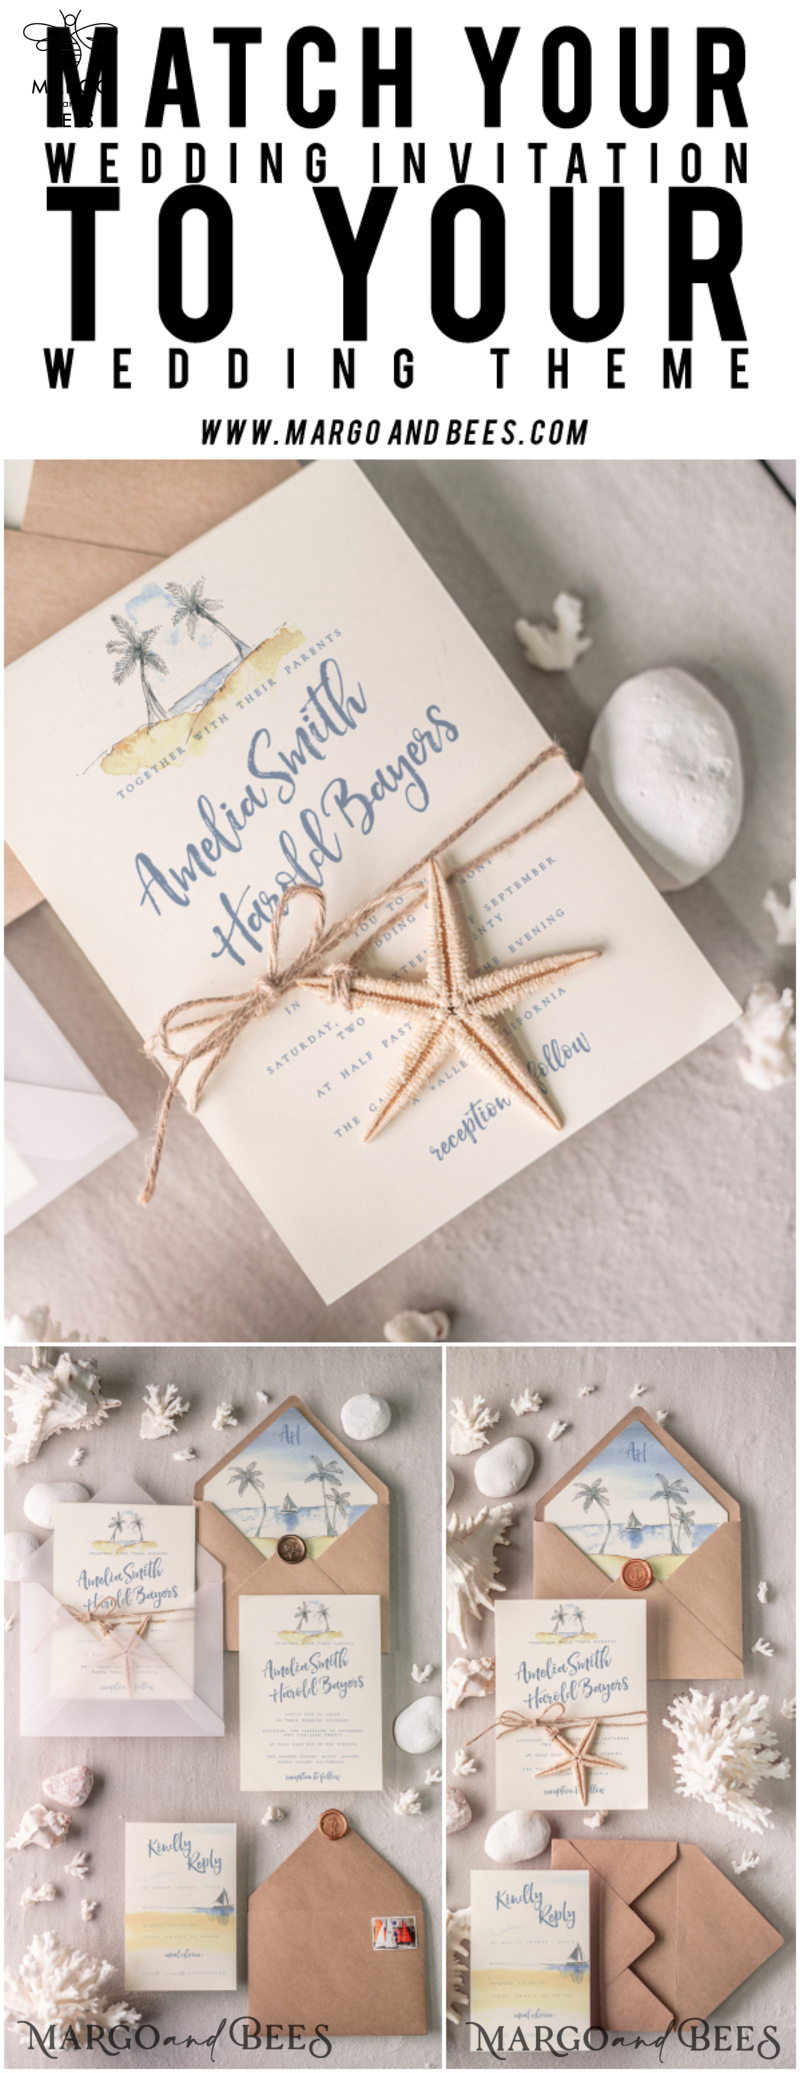 Beach Wedding invitations Starfish Wedding Invites Tropical wedding Cards with twine Vellum envelope-17